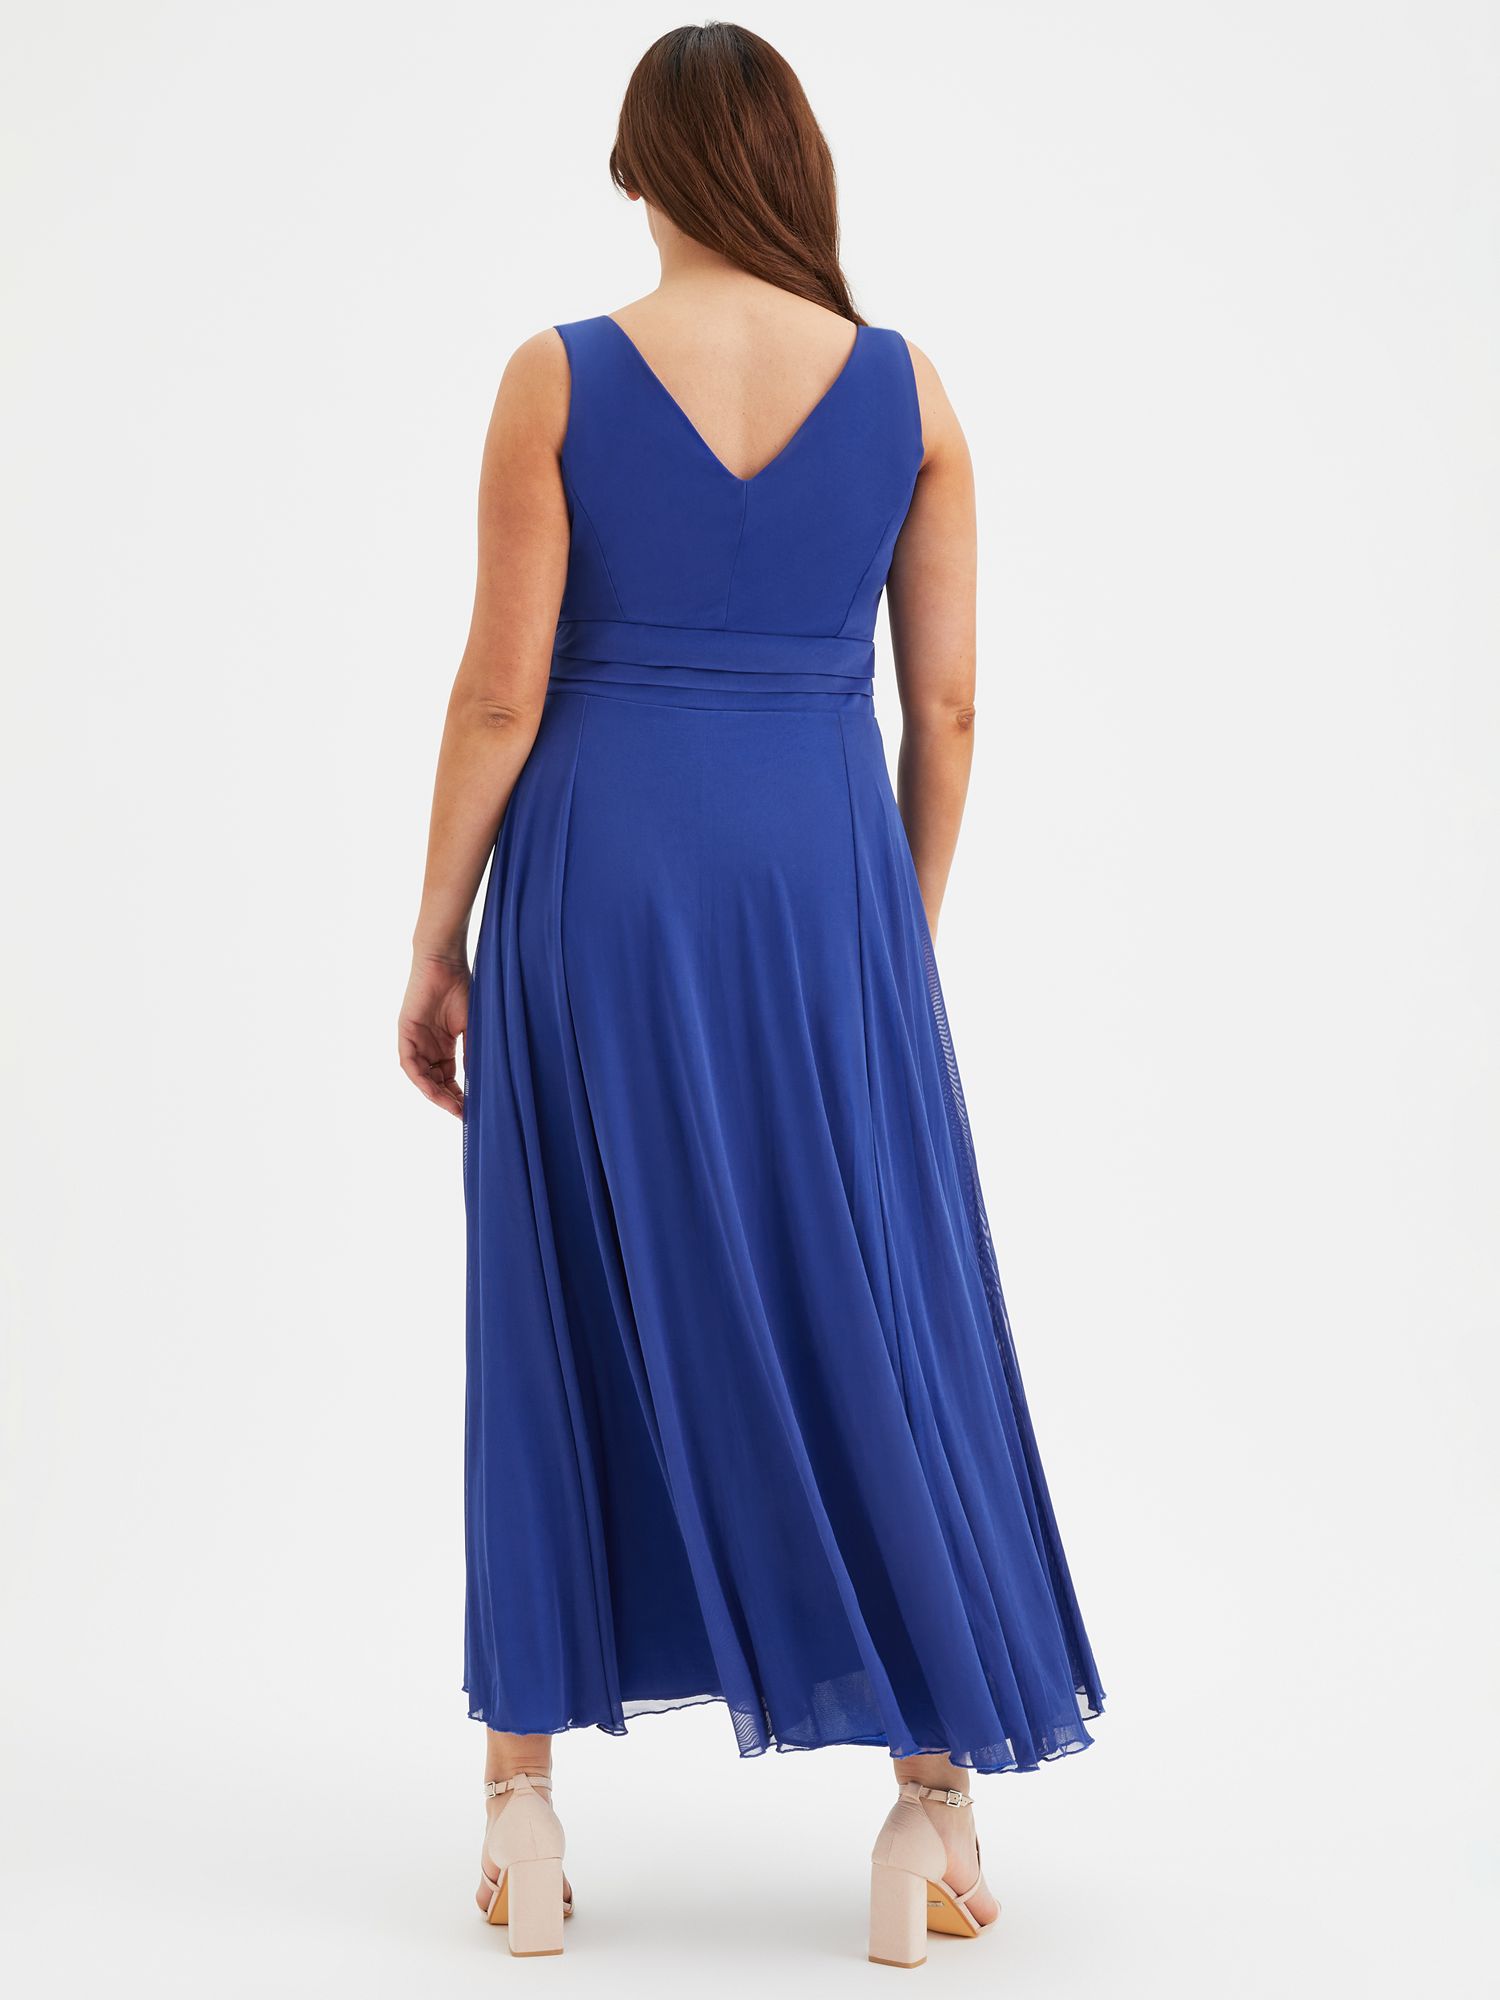 Scarlett & Jo Nancy Marilyn Sleeveless Mesh Maxi Dress, Solid Royal Blue, 12